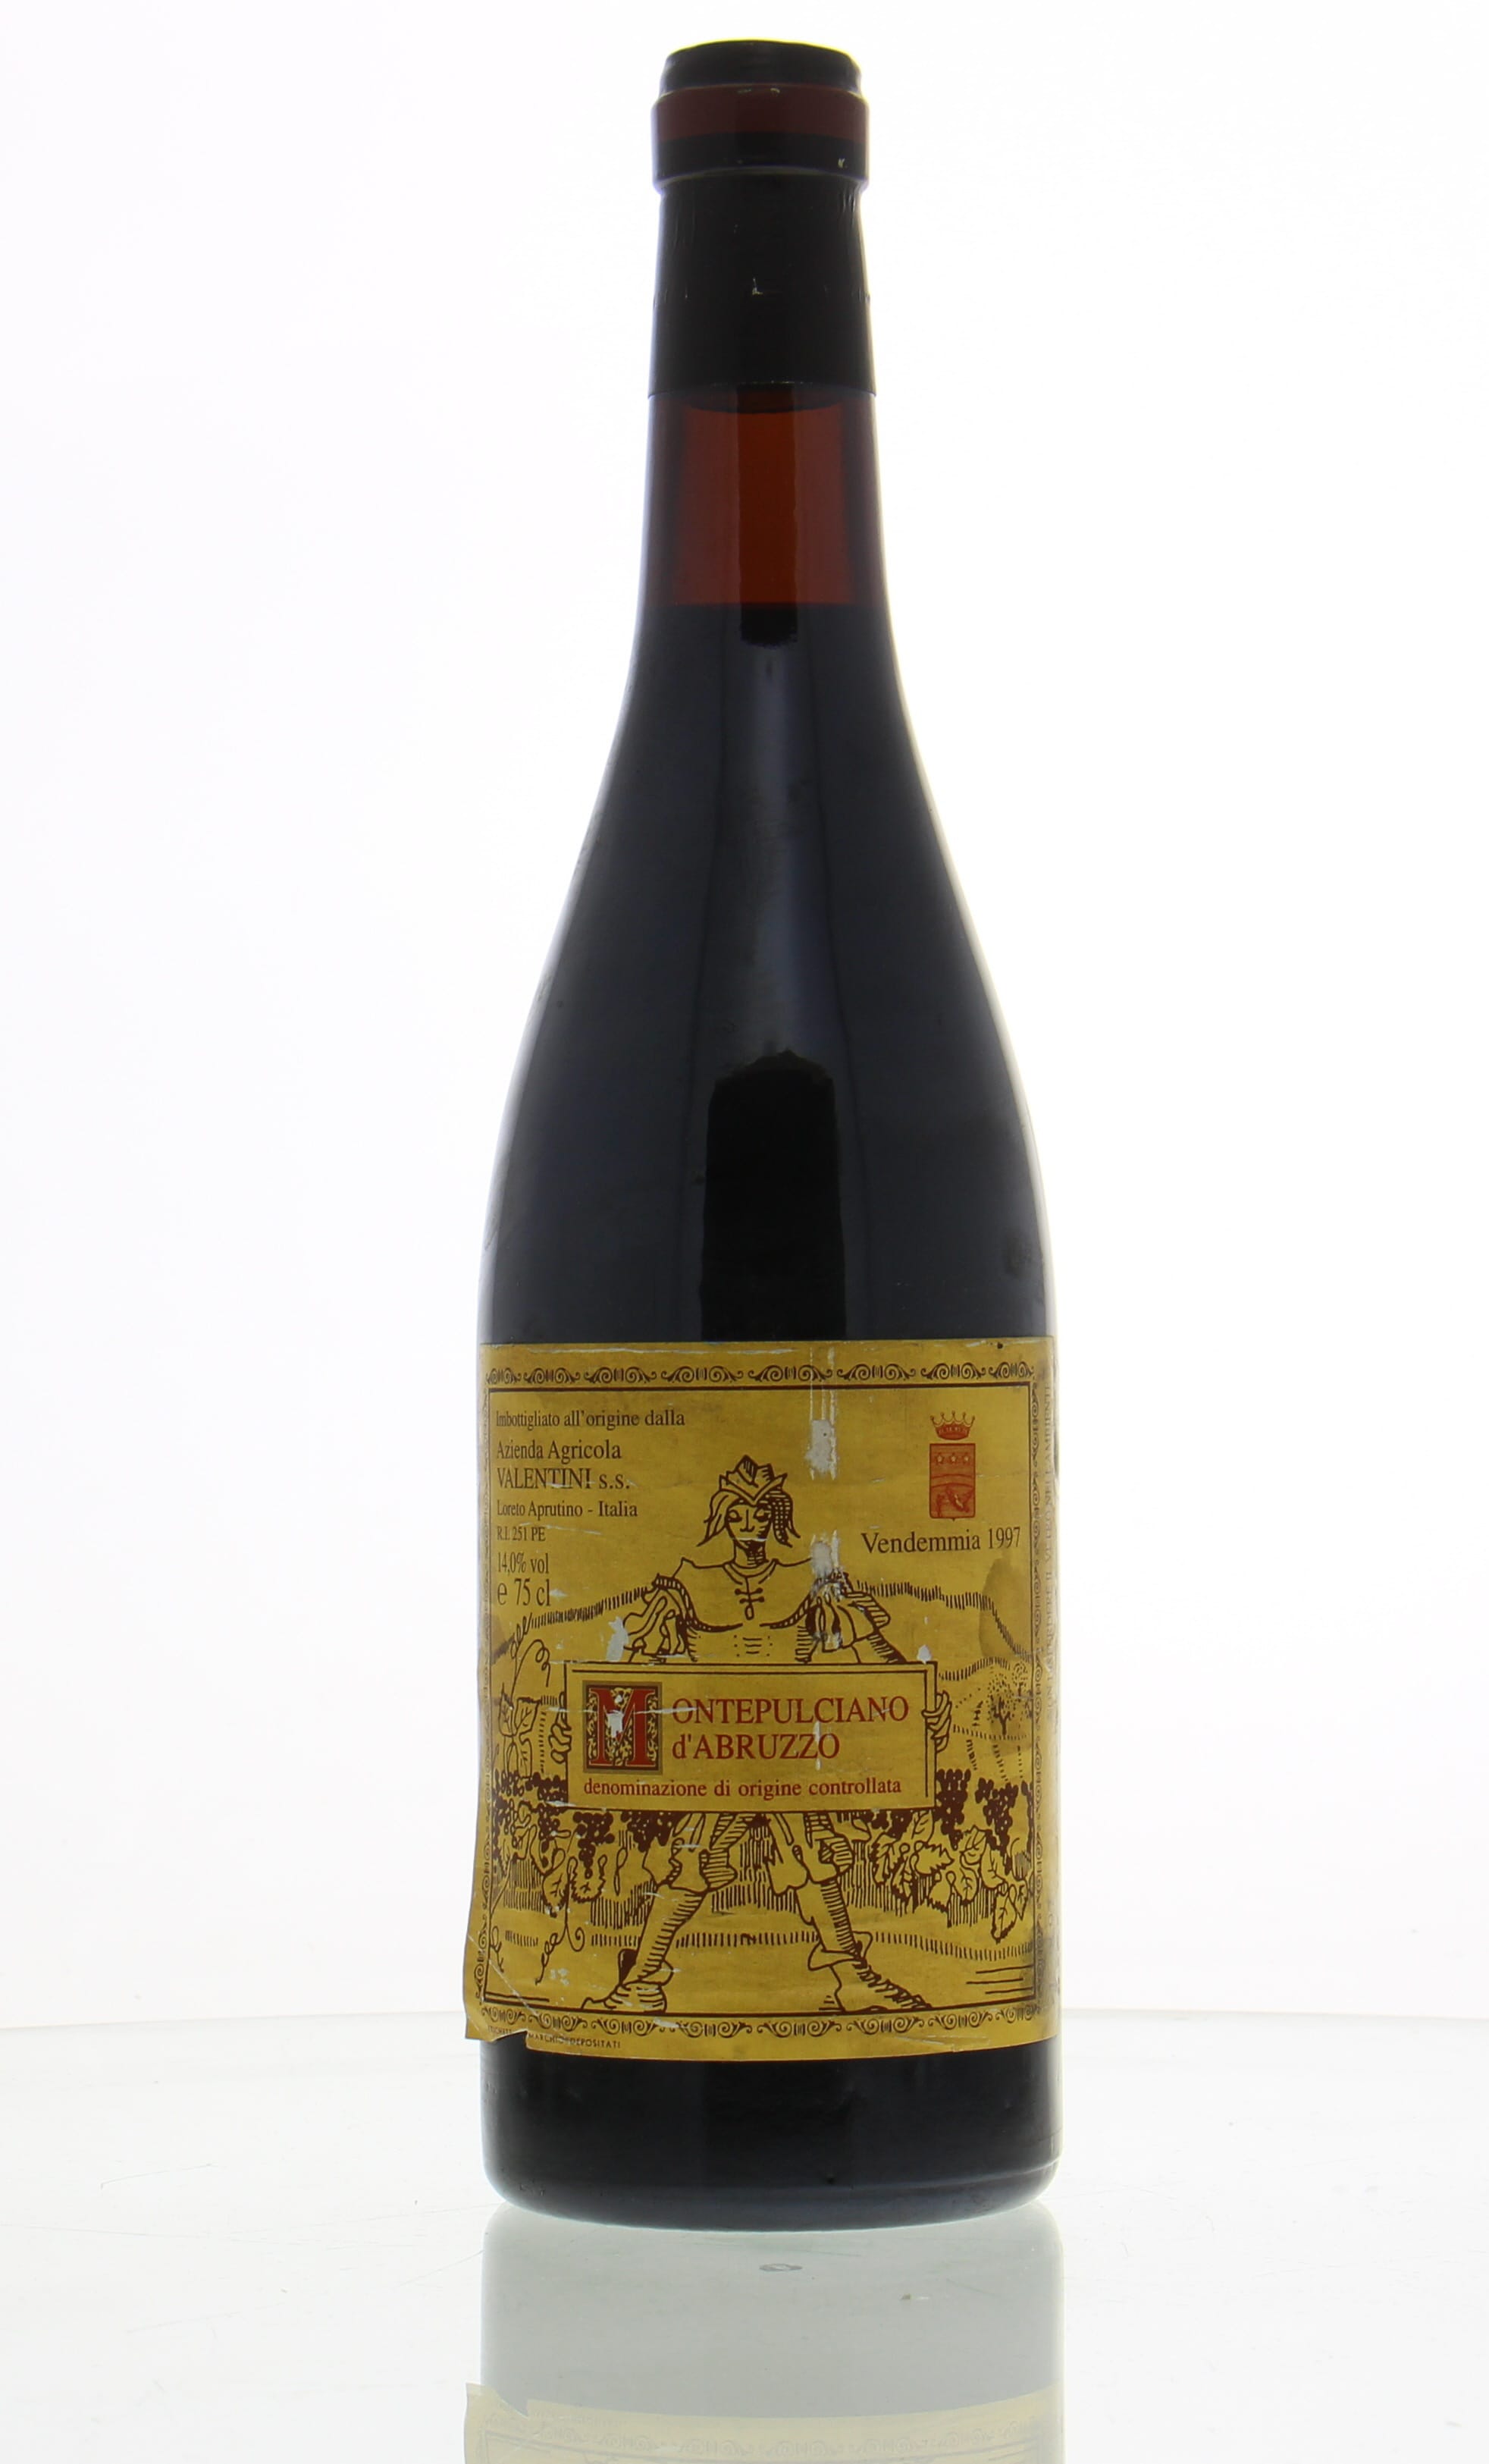 Montepulciano d'Abruzzo 1997 - Valentini | Buy Online | Best of Wines